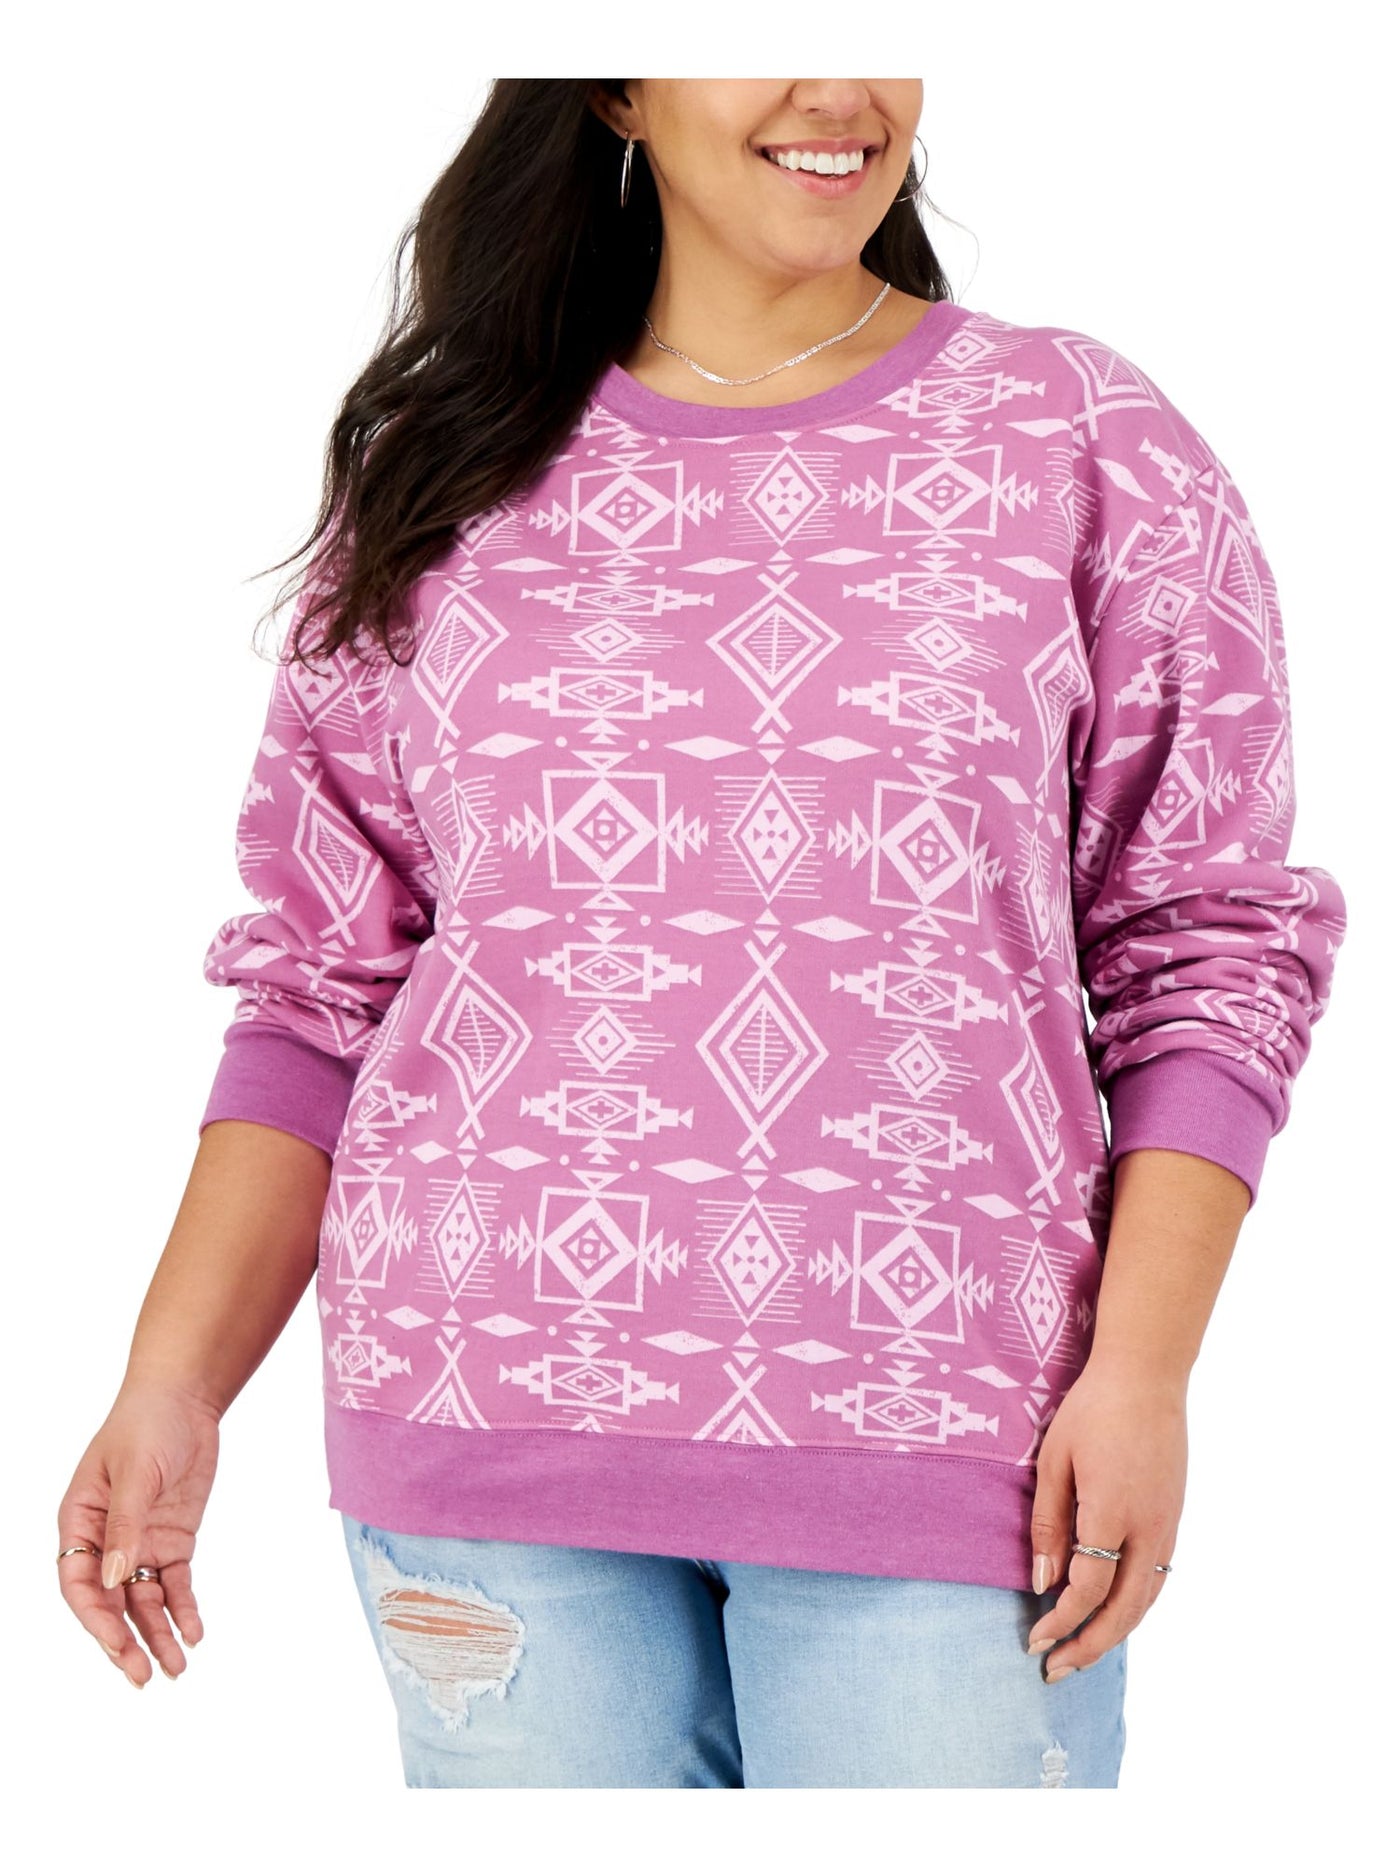 MIGHTY FINE Womens Purple Printed Sweatshirt Plus 1X